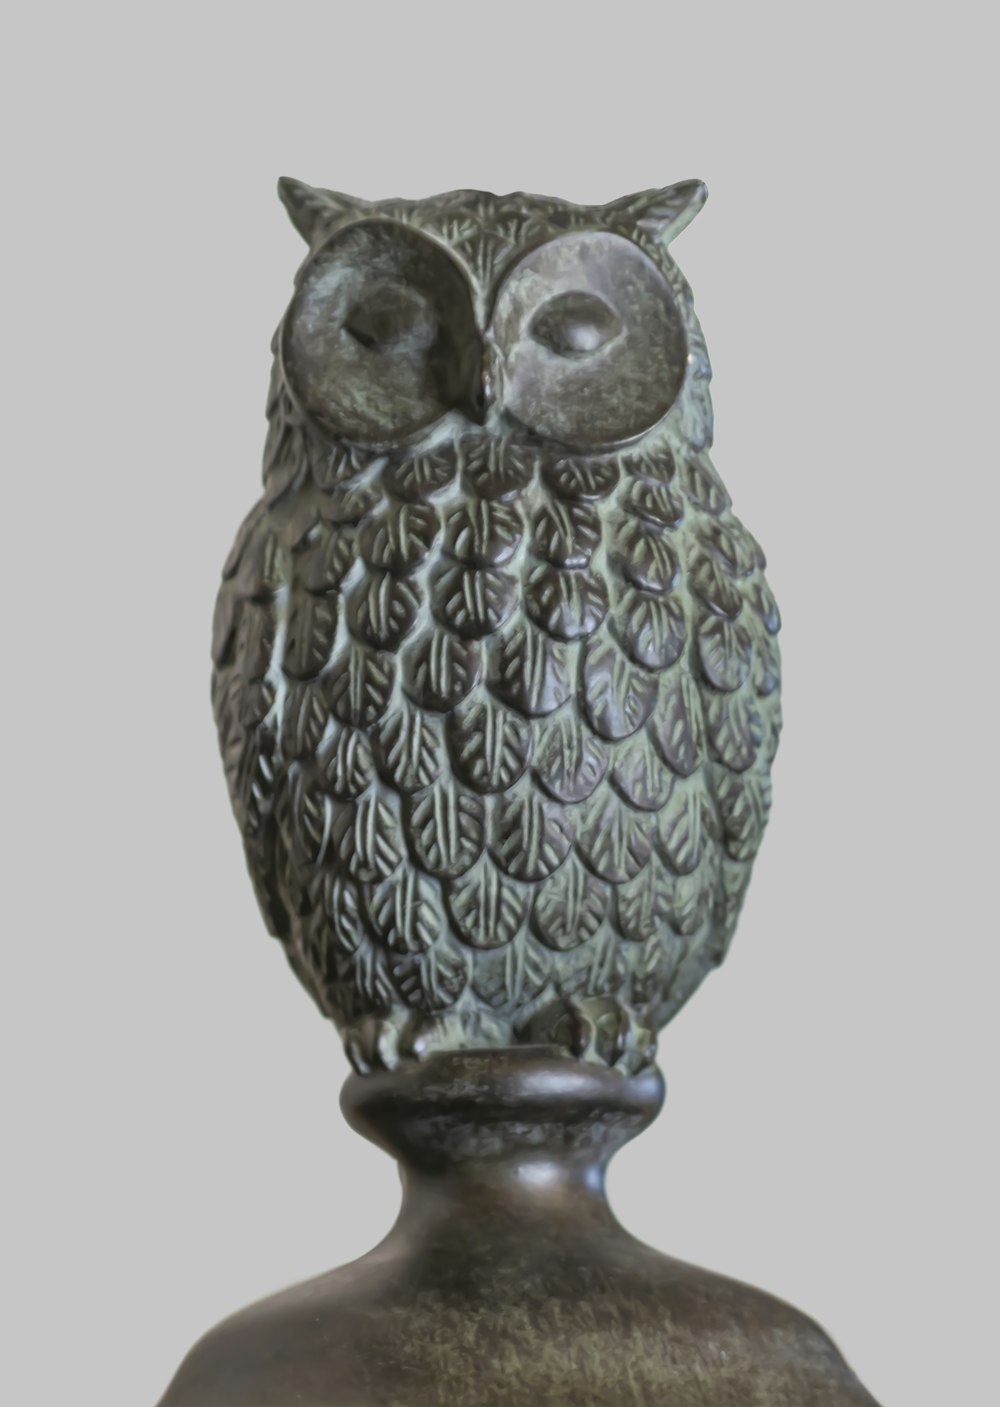 gray owl ceramic figurine on white surface